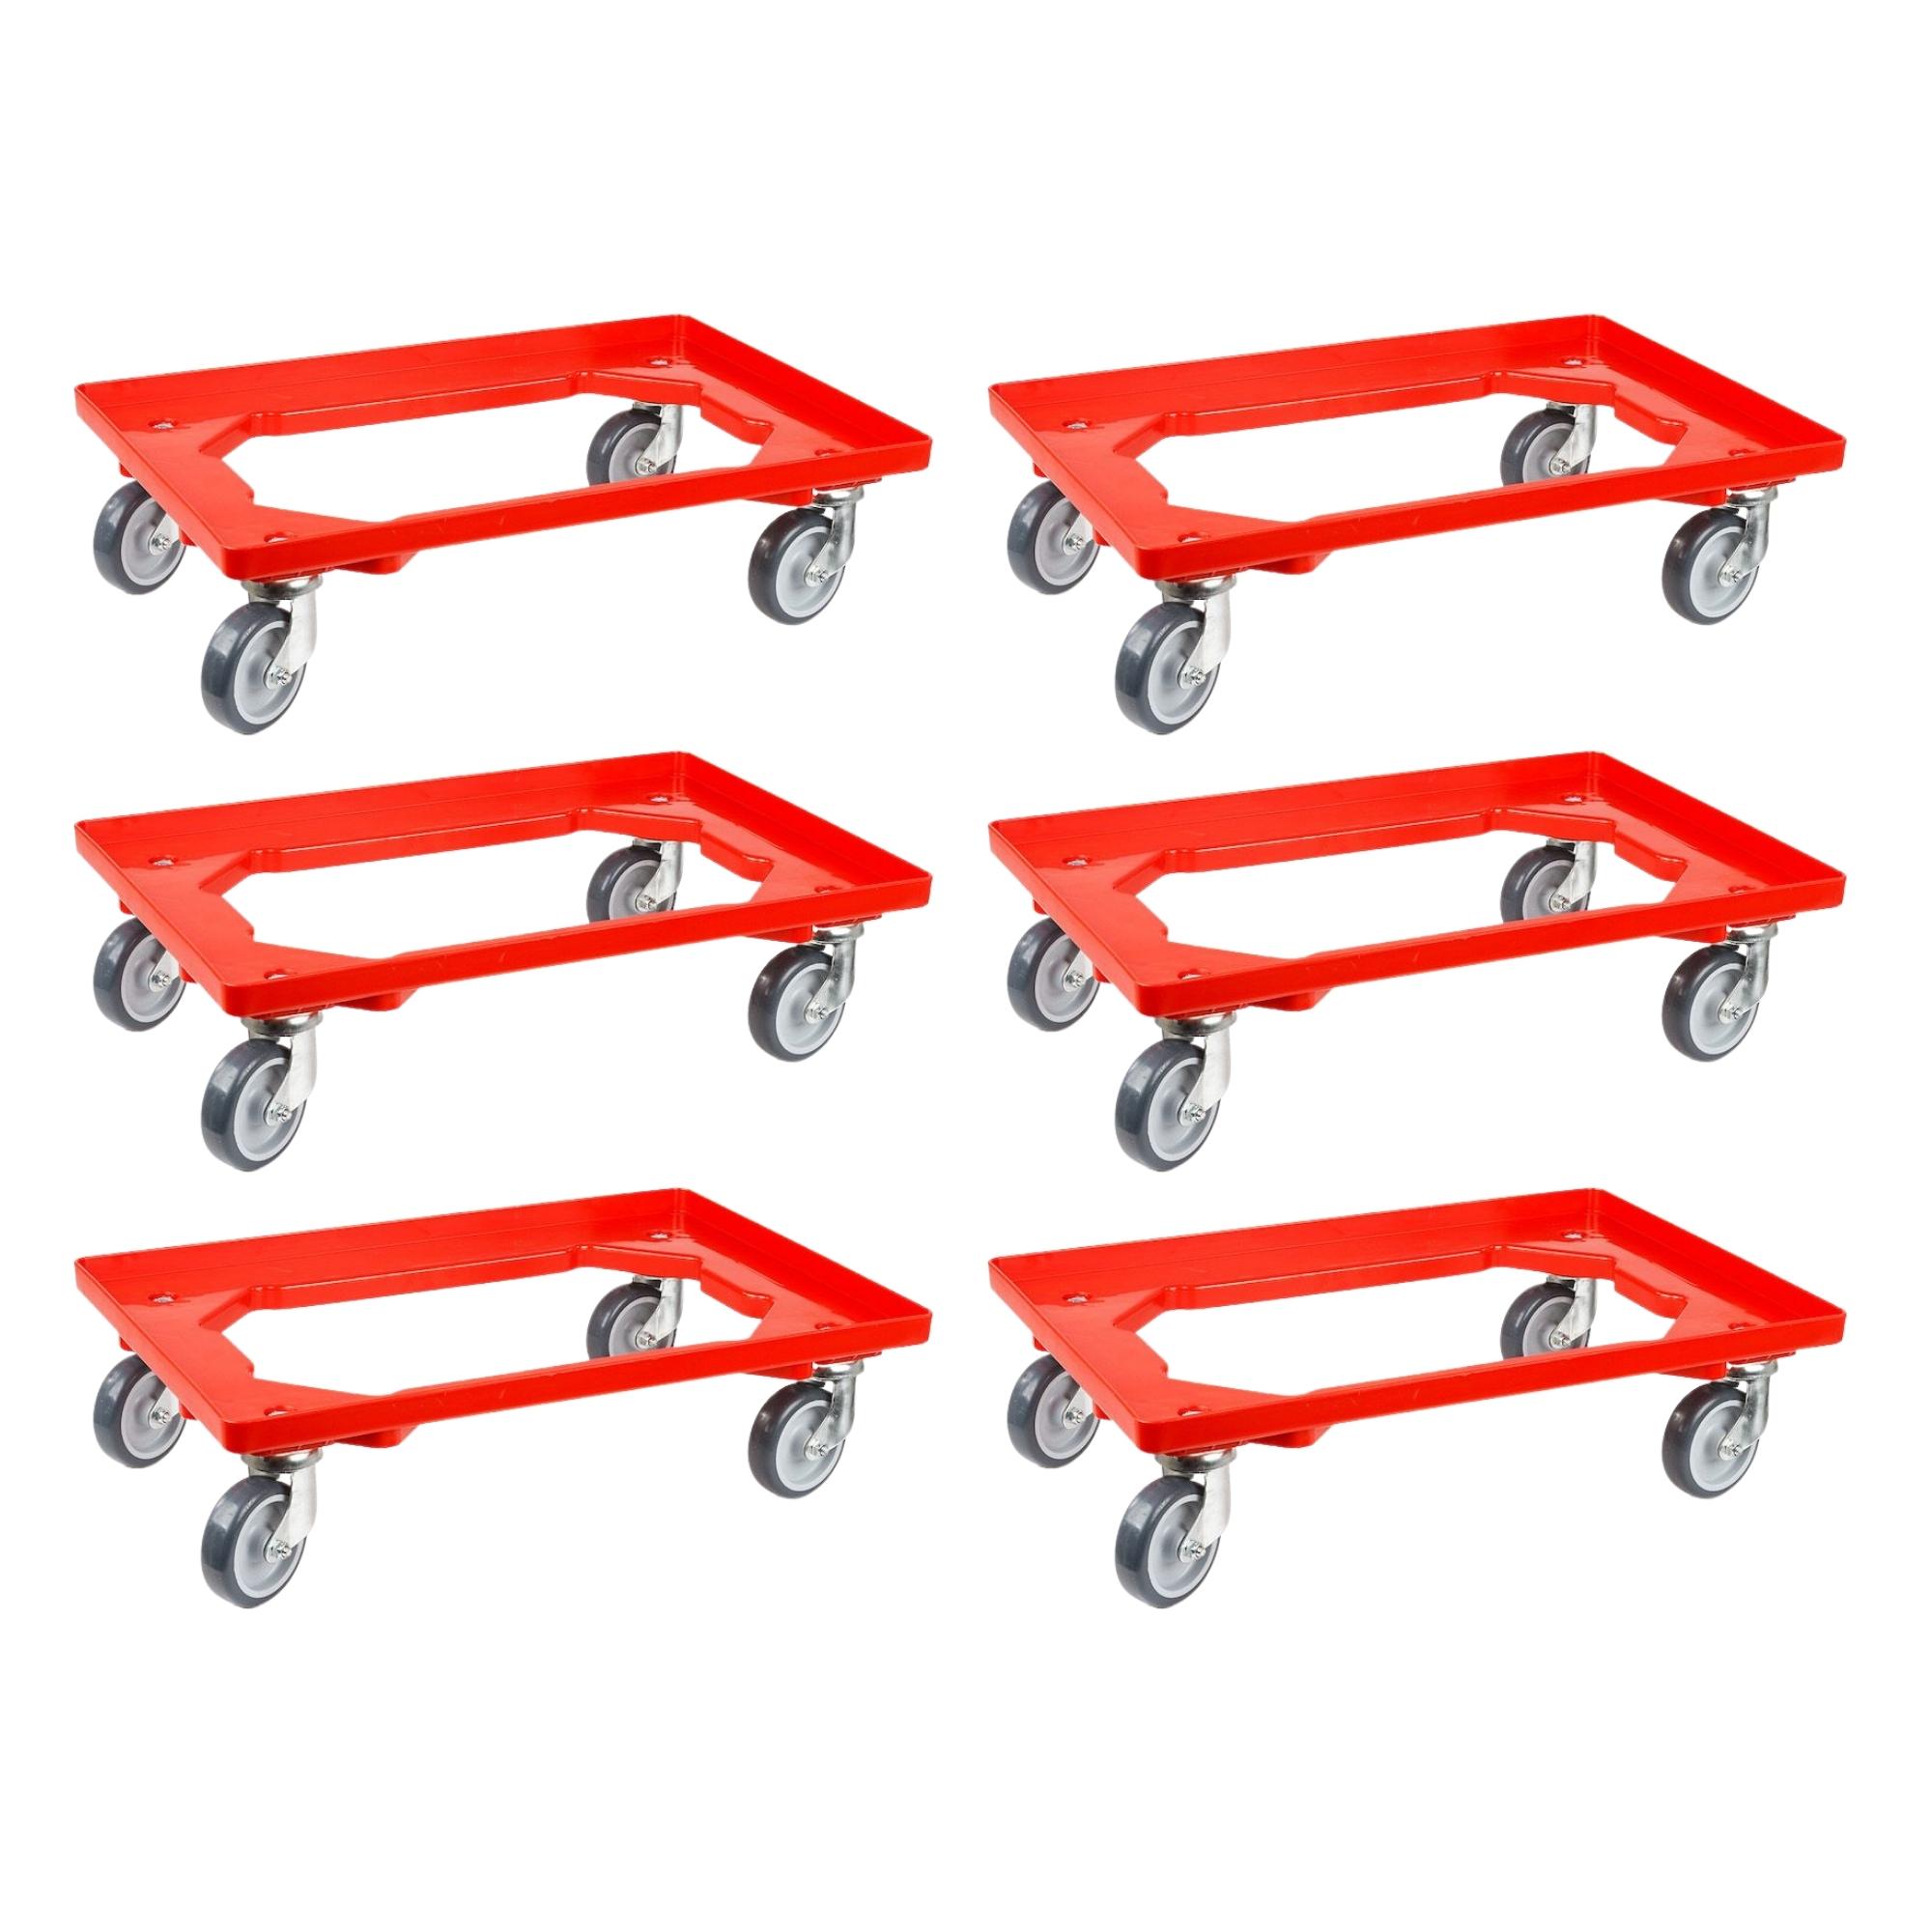 SparSet 6x Transportroller für Euroboxen 60x40cm mit Gummiräder rot | Offenes Deck | 4 Lenkrollen | Traglast 300kg | Kistenroller Logistikroller Rollwagen Profi-Fahrgestell